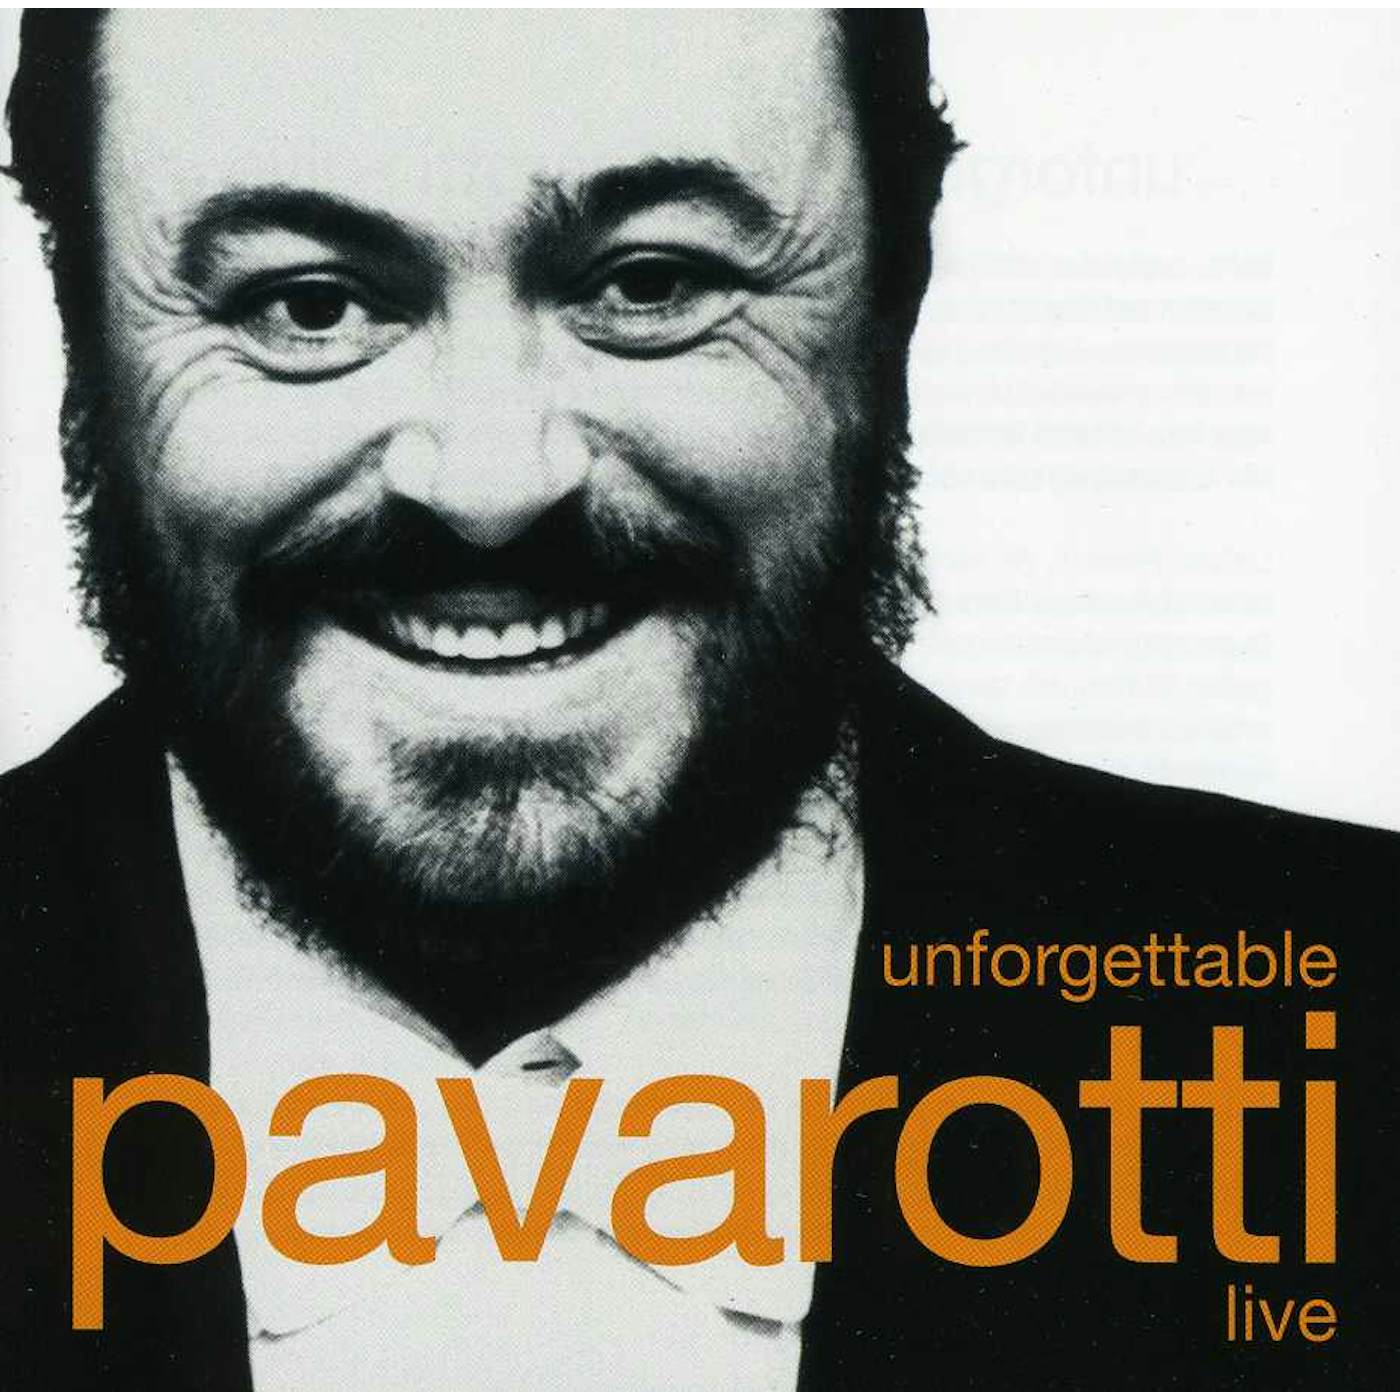 UNFORGETTABLE Luciano Pavarotti LIVE CD